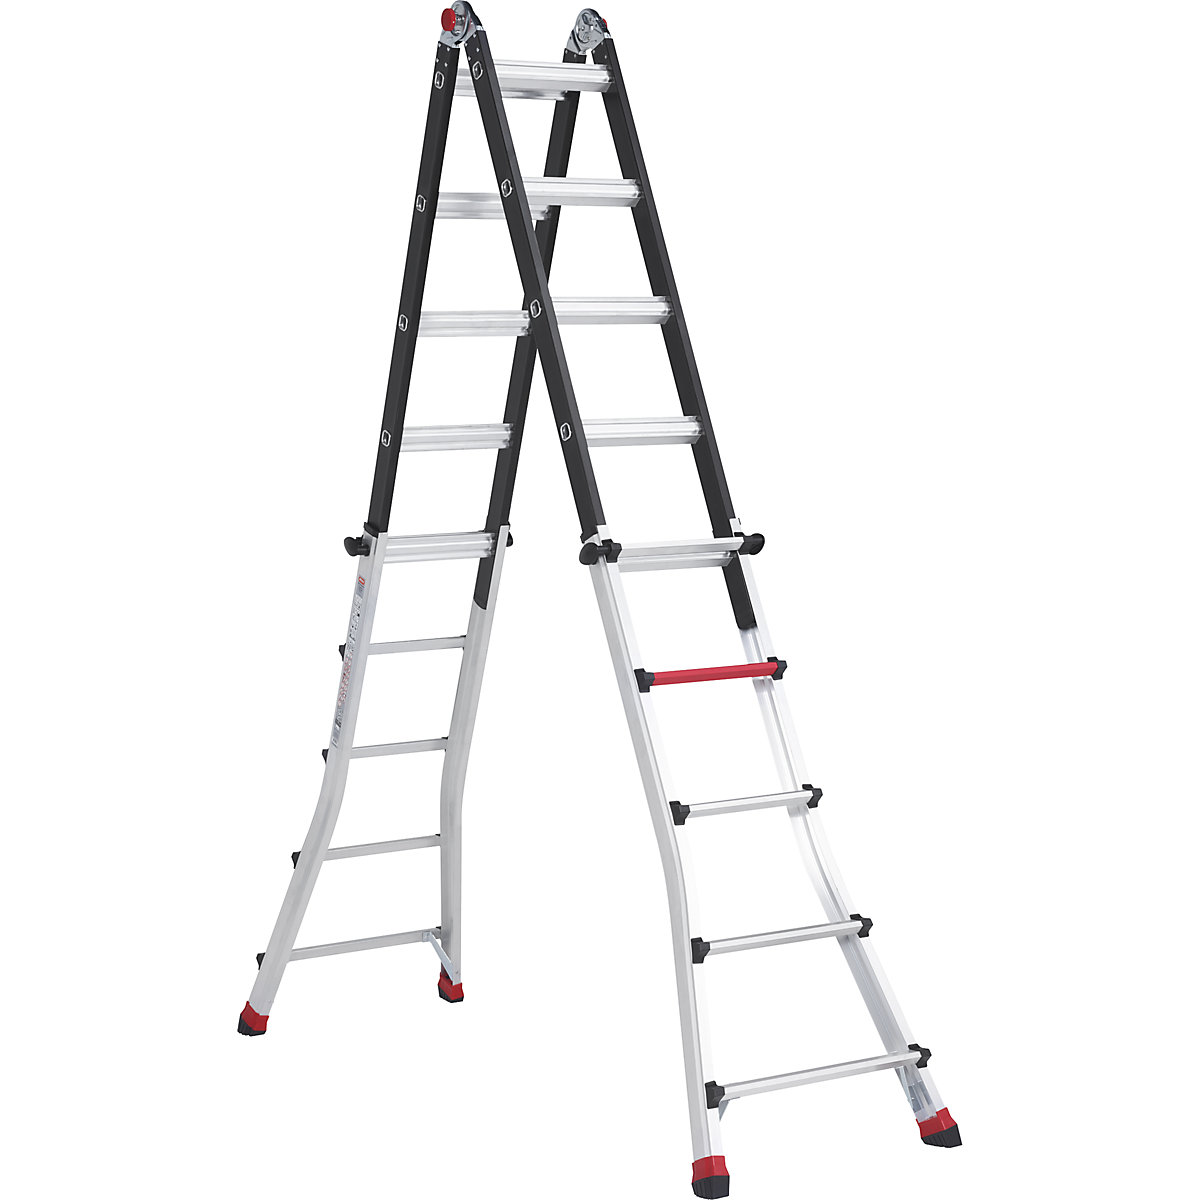 Telescopic folding ladder – Altrex